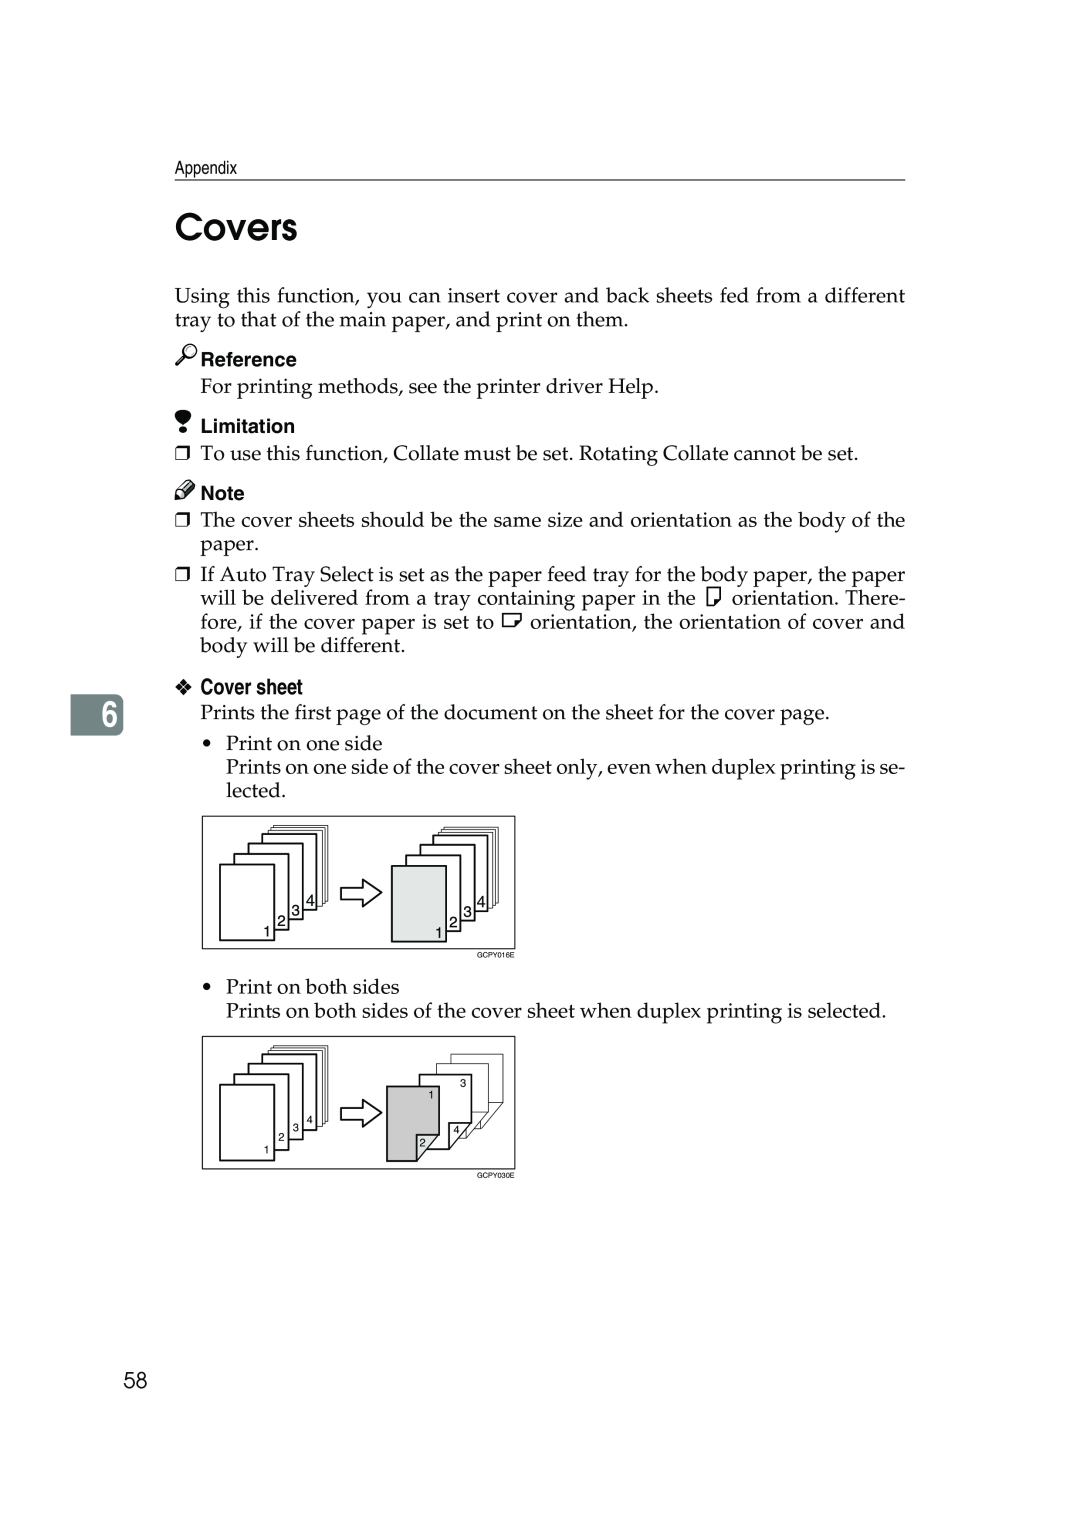 Xerox 2045e appendix Covers, Cover sheet, Reference, Limitation 